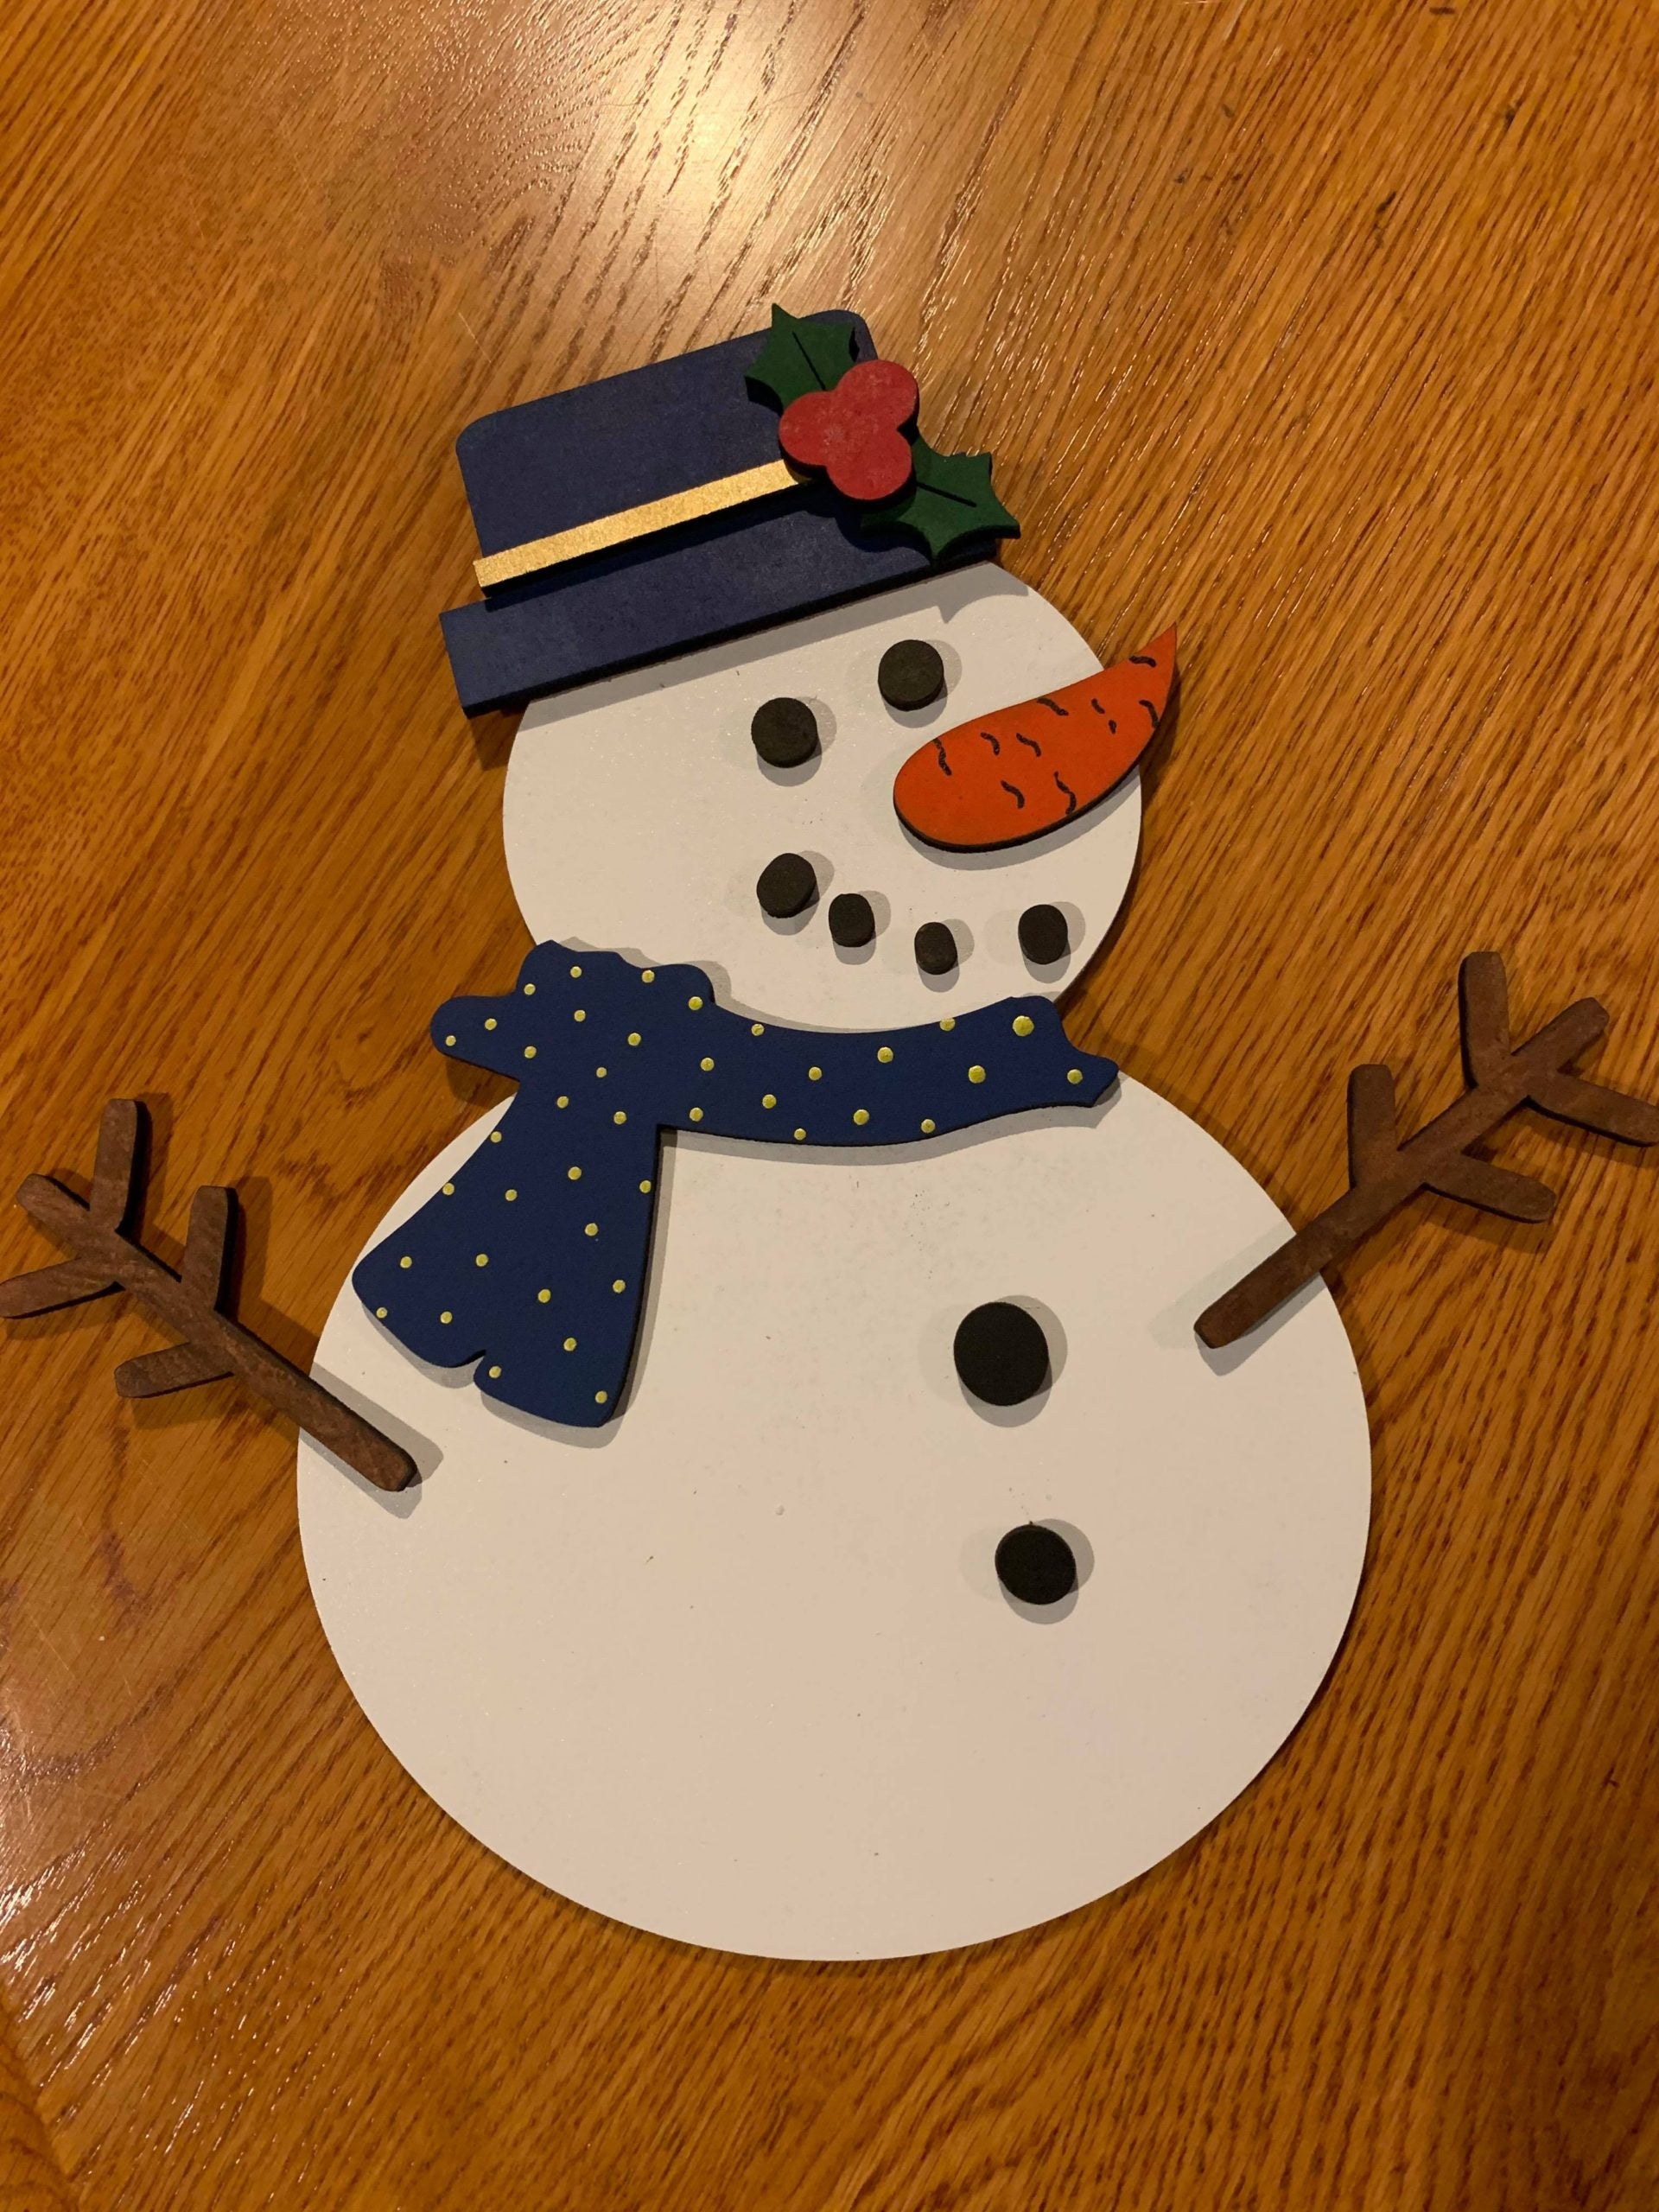 DIY Snowman Making Kit - Inspiration Made Simple